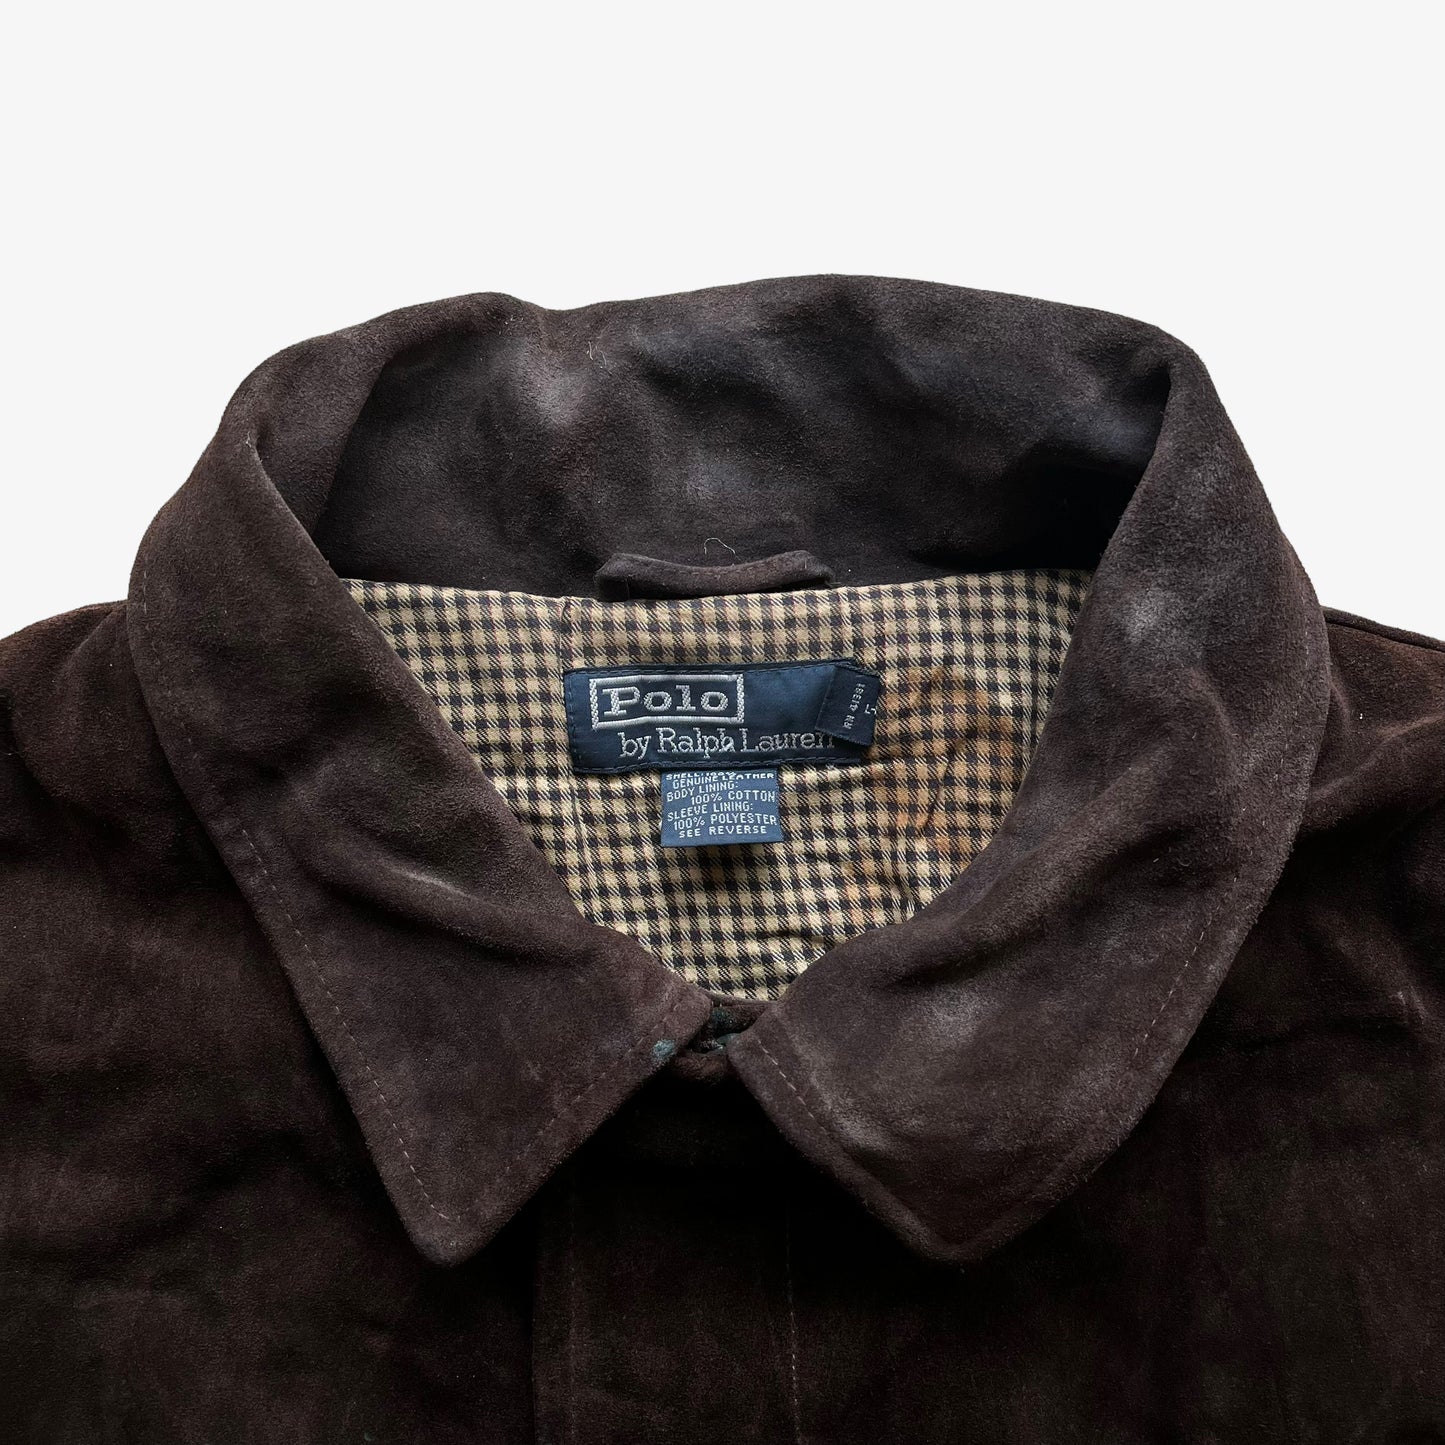 Vintage 90s Polo Ralph Lauren Brown Leather Jacket Label - Casspios Dream